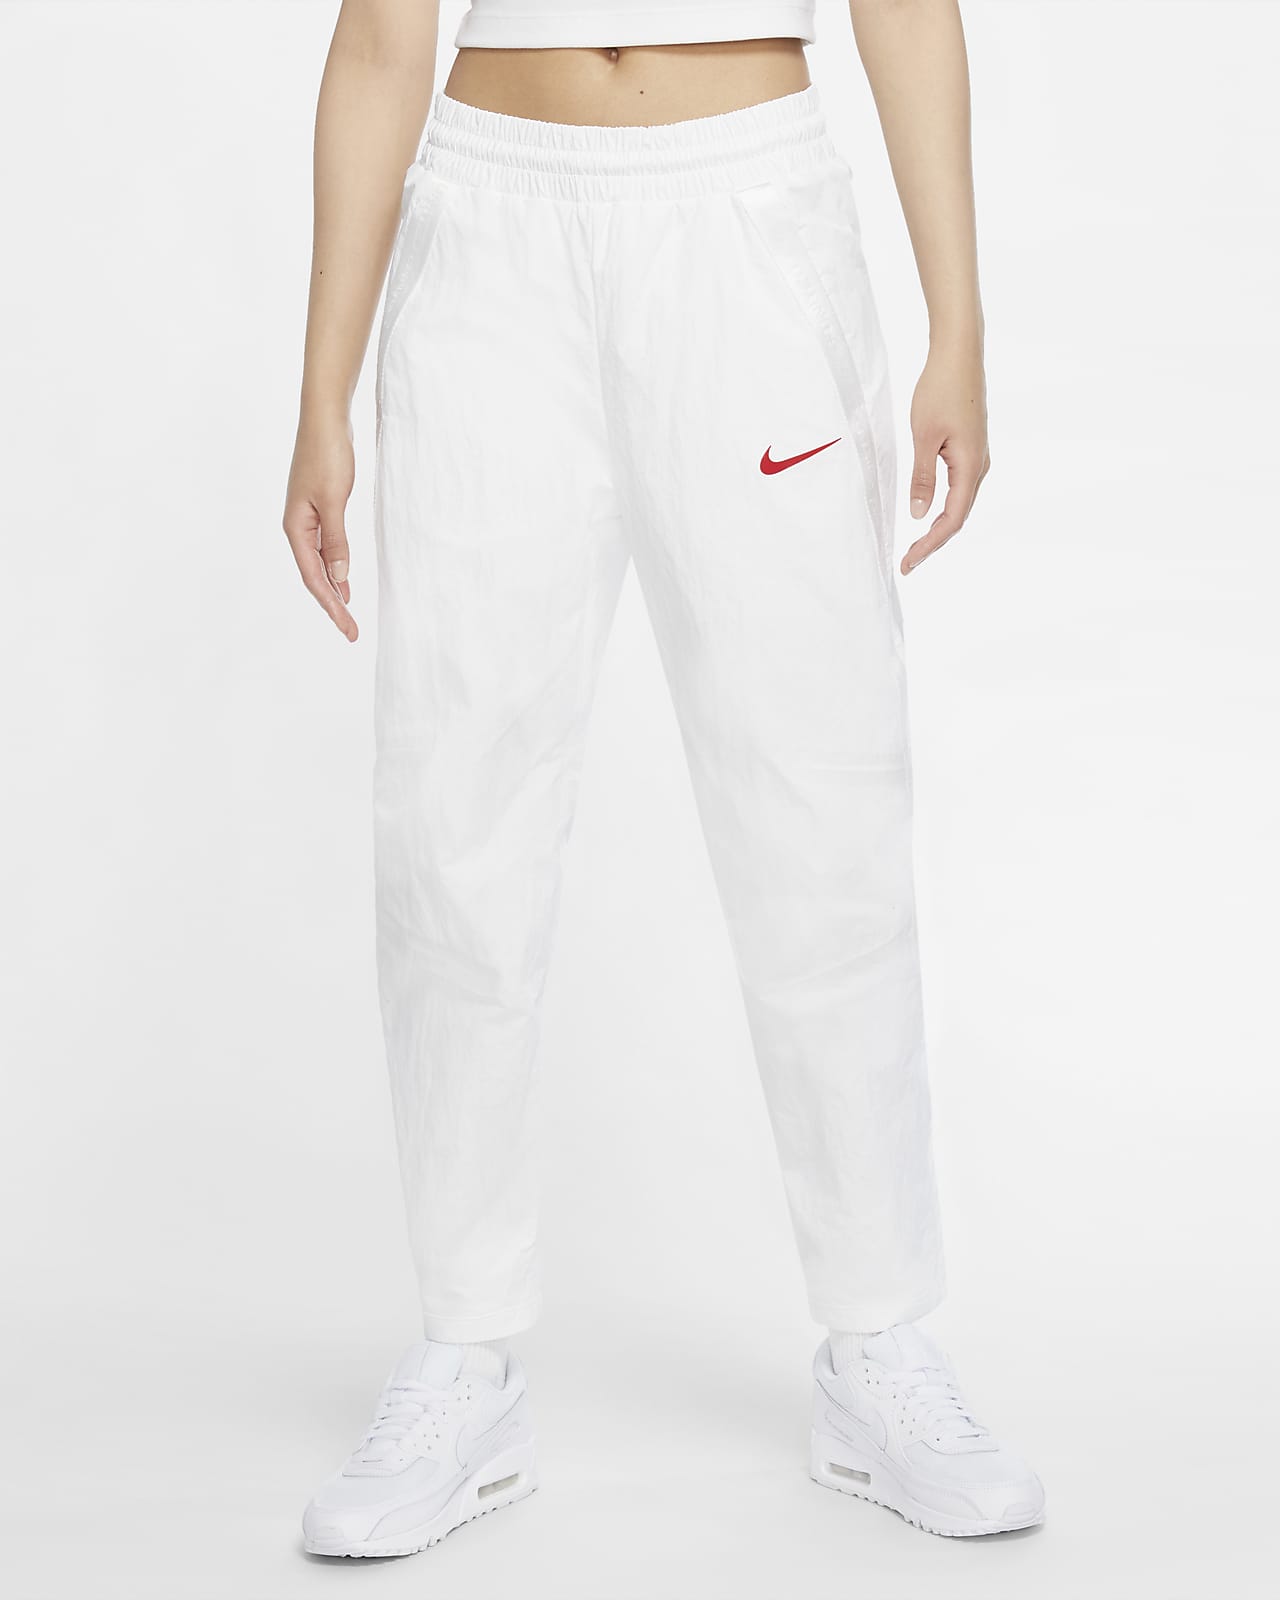 Nike Team USA Women's Medal Stand Pants